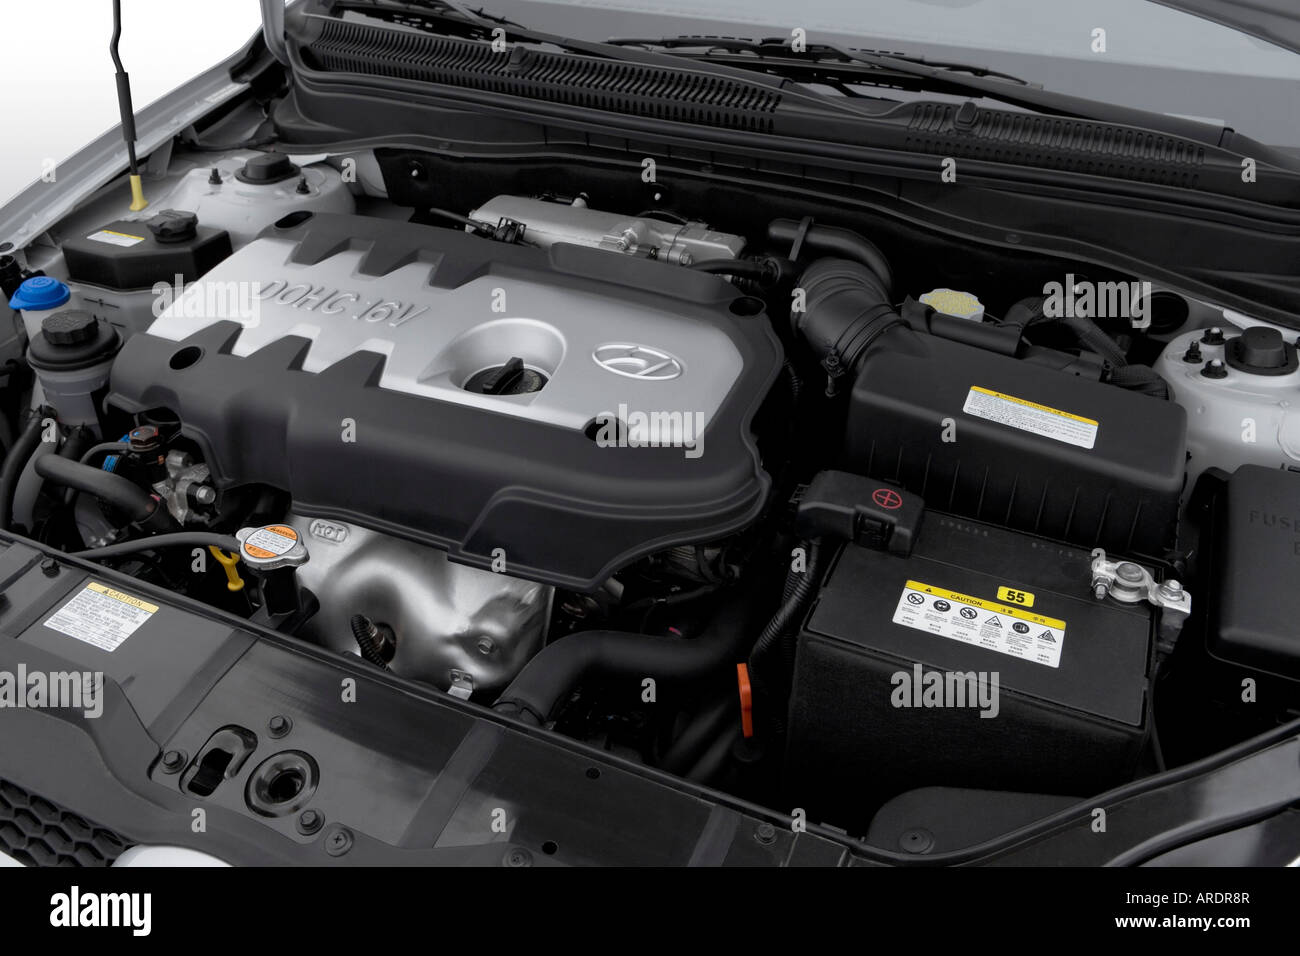 2007 Hyundai Accent SE in Silver - Engine Stock Photo - Alamy